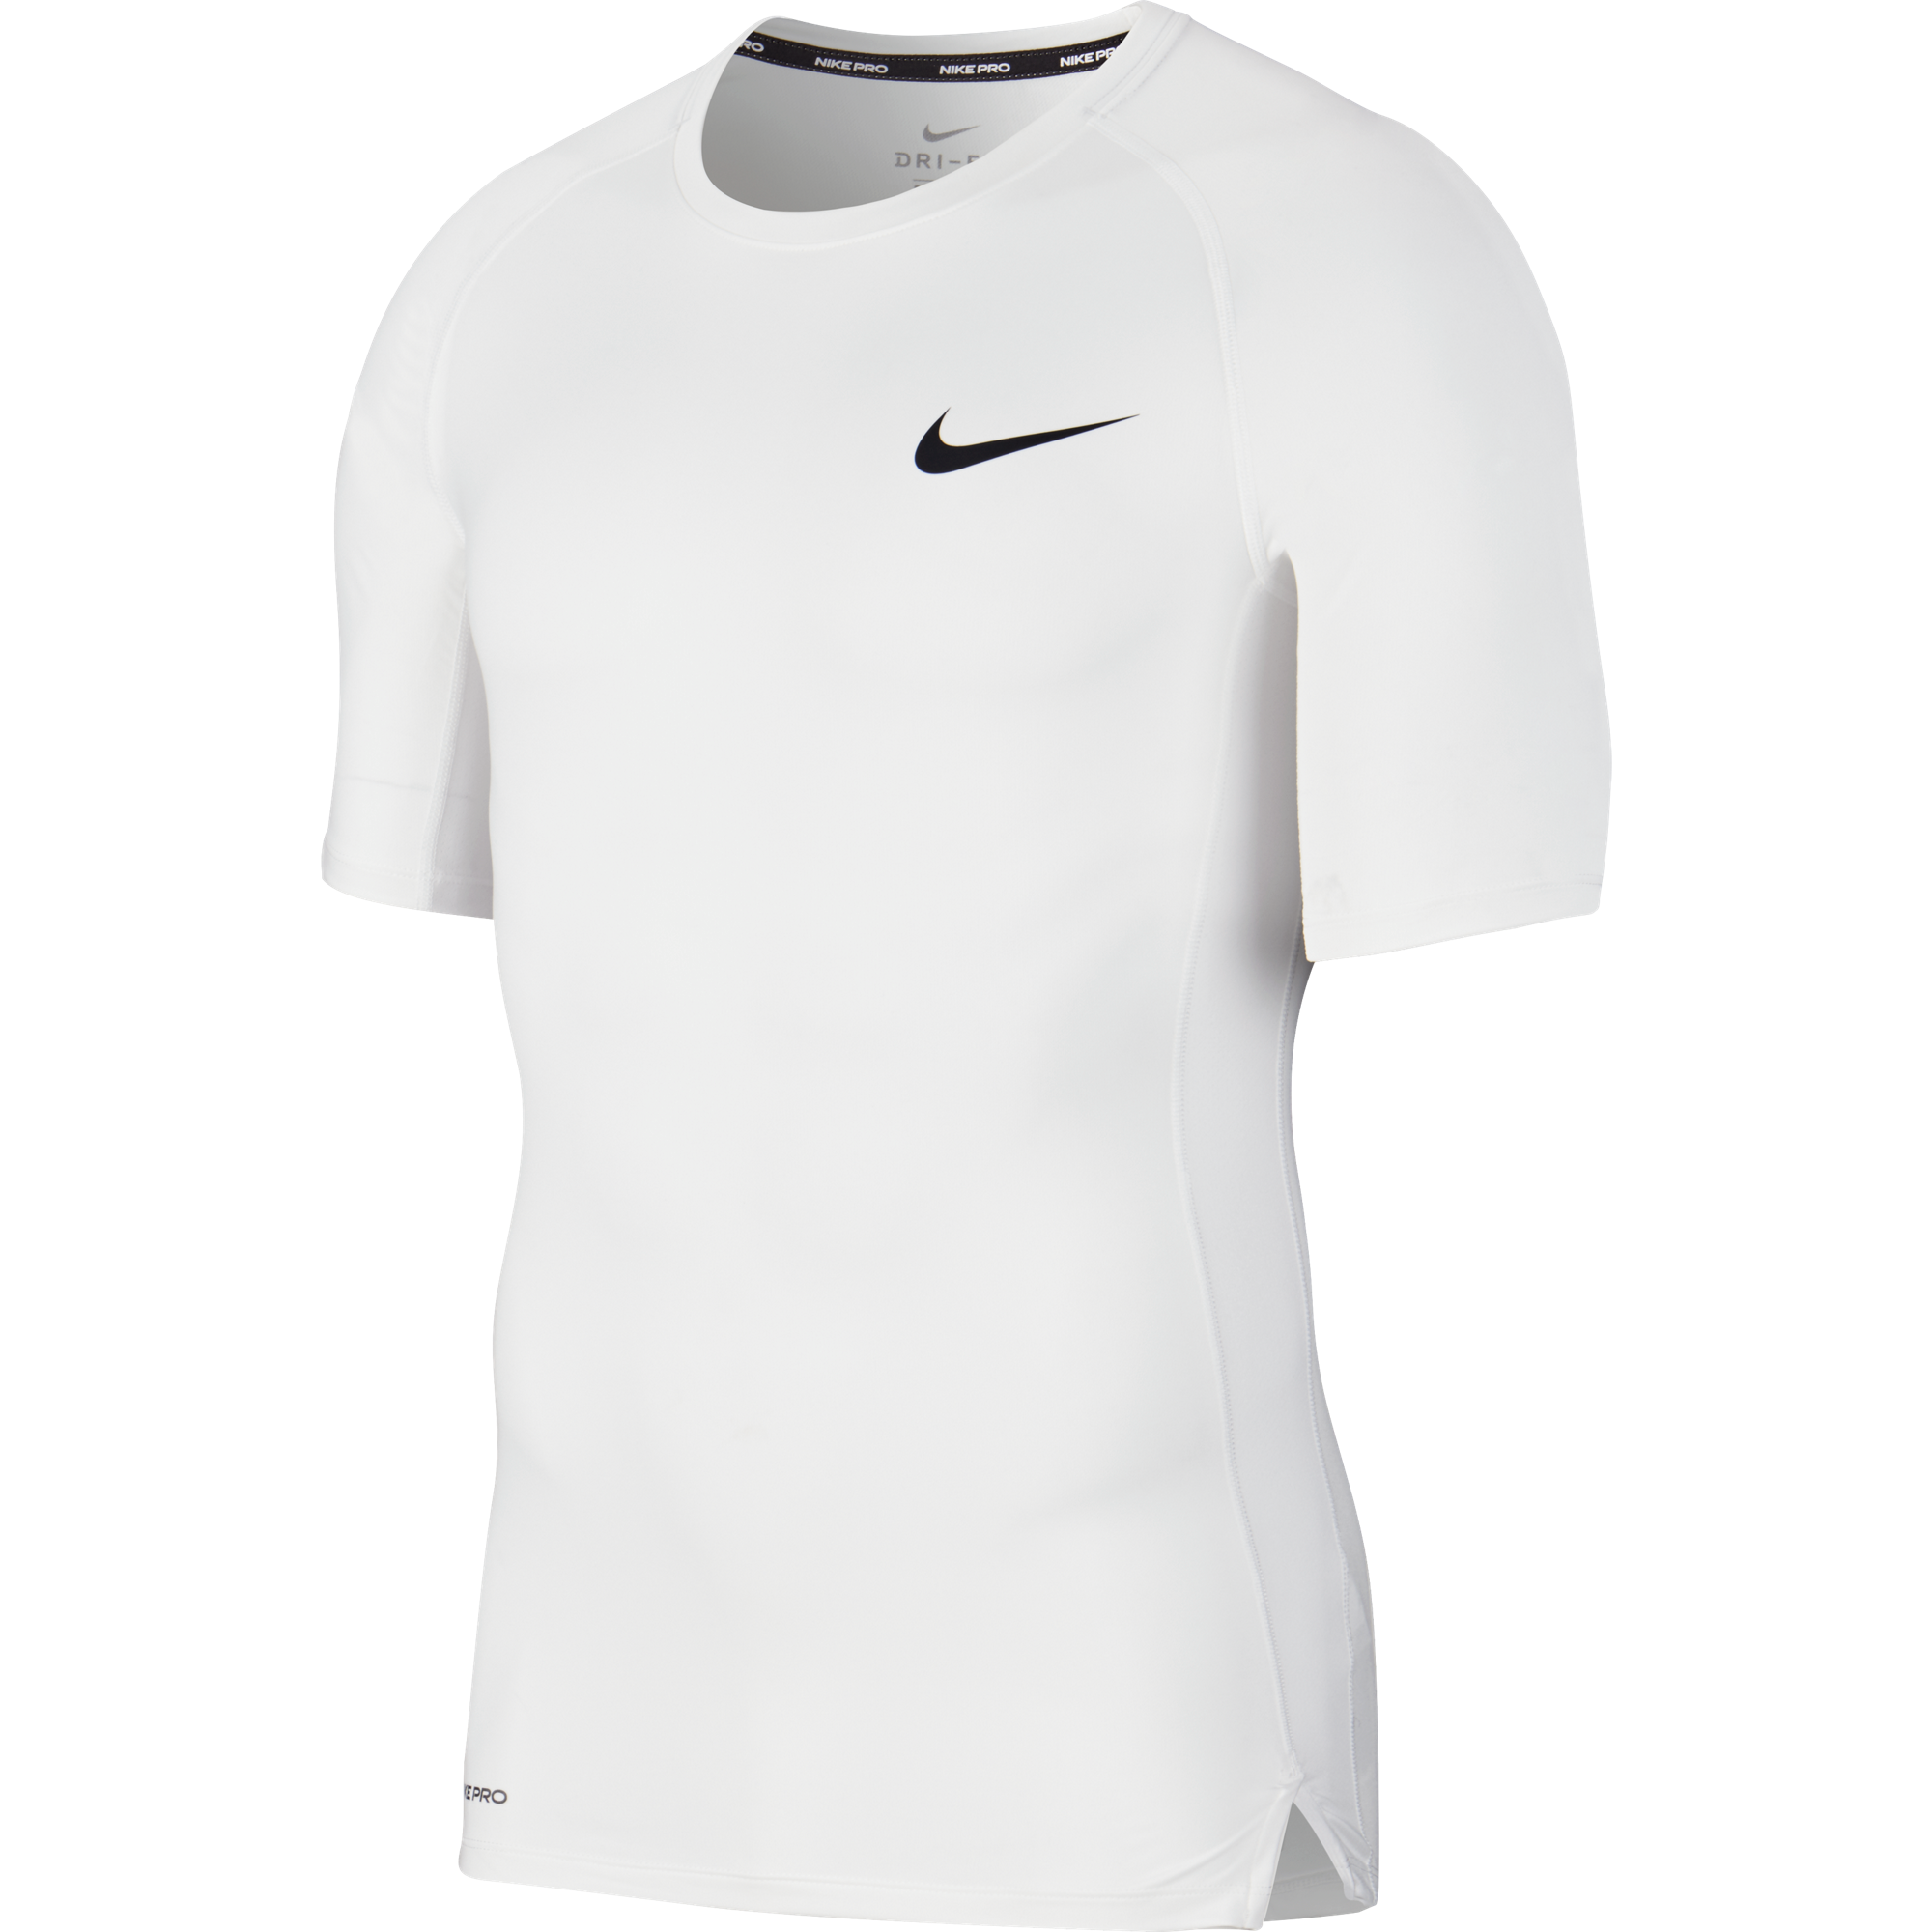 Men's Nike Pro Tight Fit Short-Sleeve Top 2021